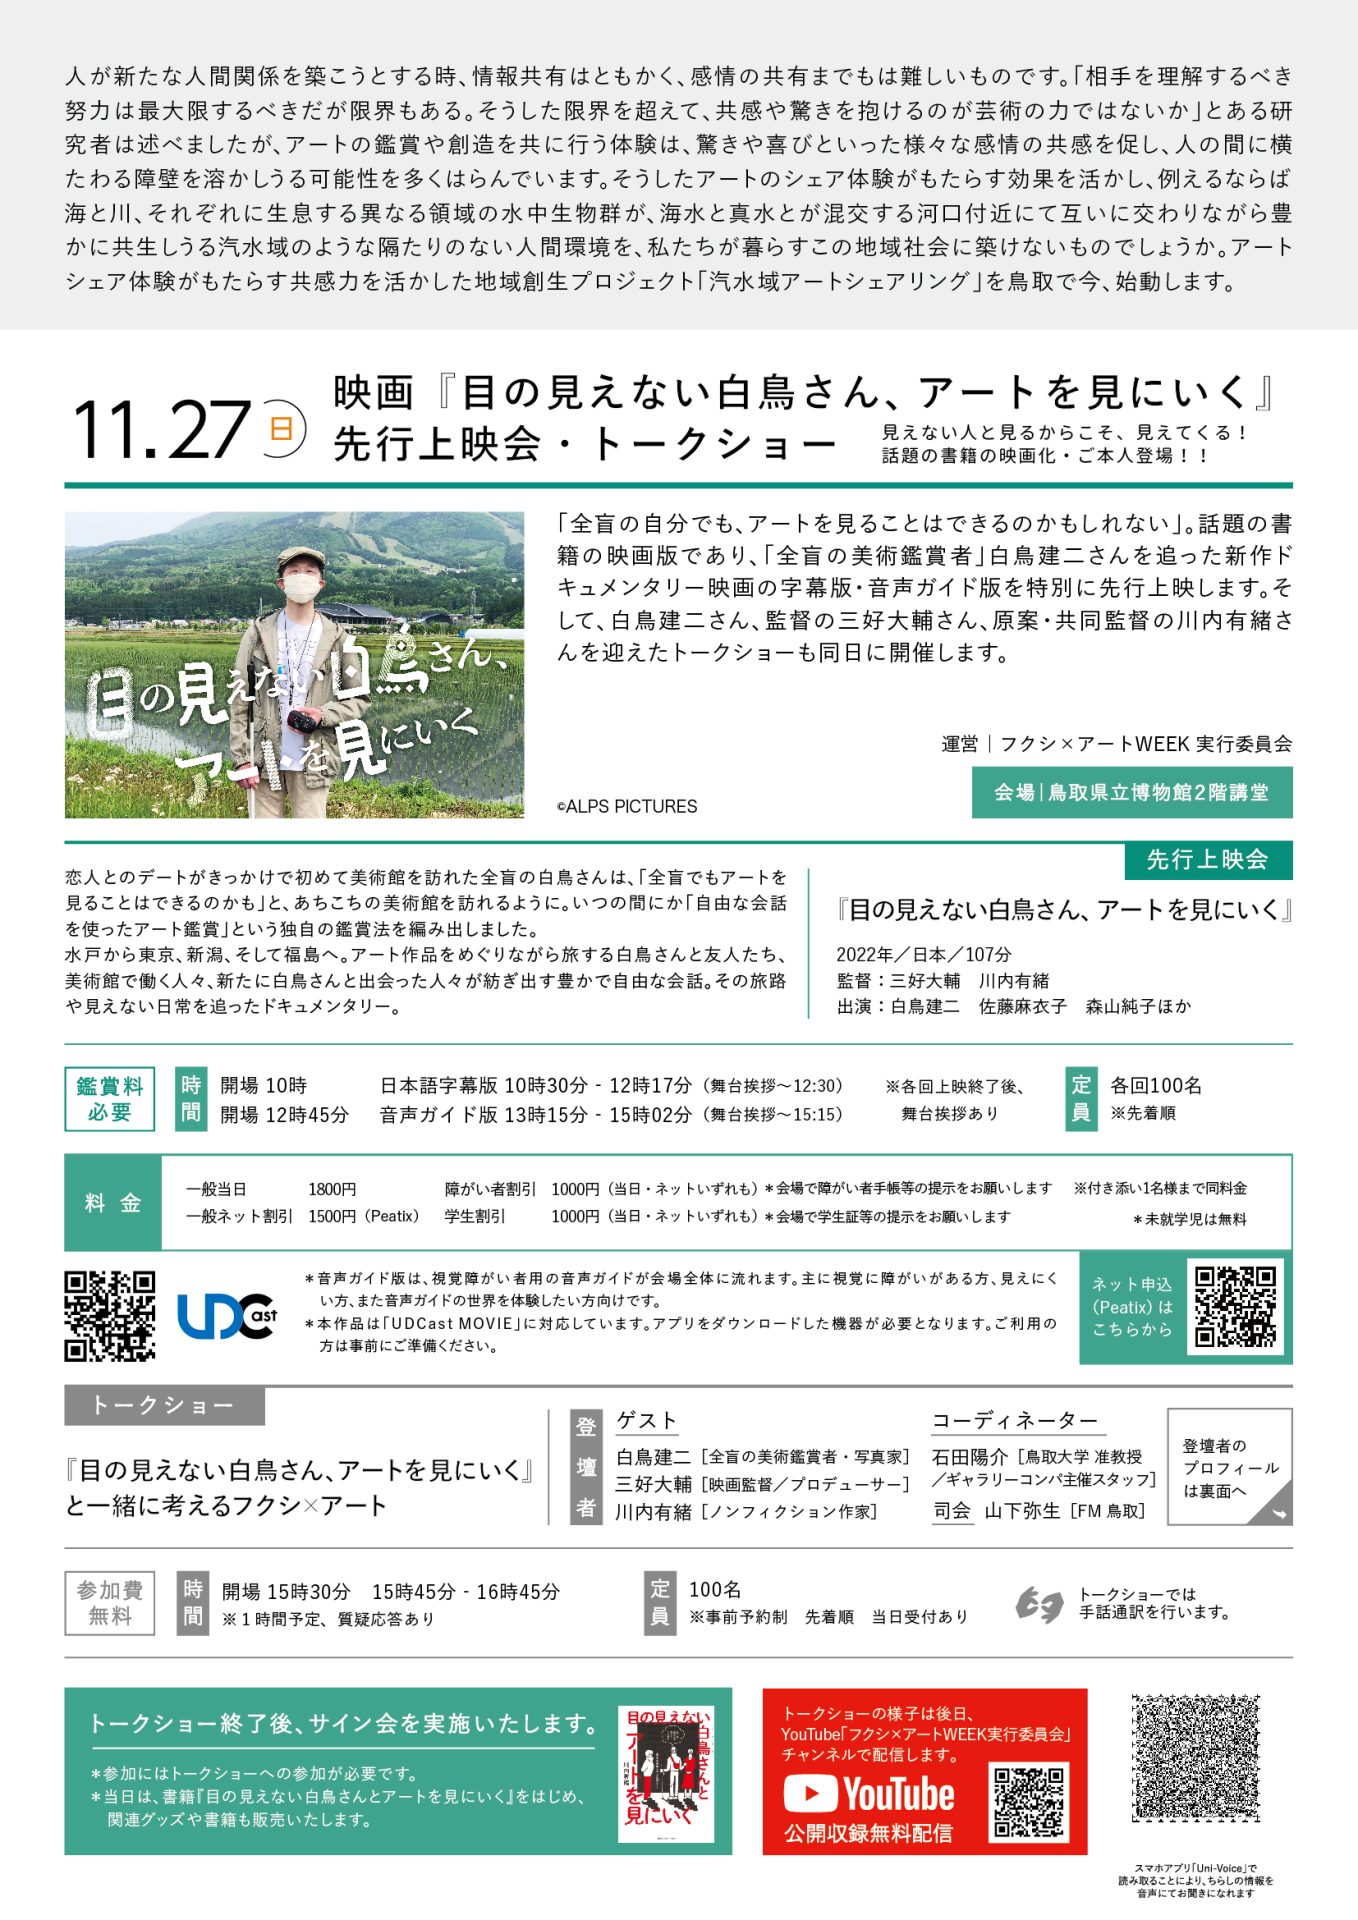 kisui_A3_3 【イベント】11/26,27 ウェルビーイングを共創するプレ美術館セラピープログラム 「汽水域アートシェアリング2022」開催